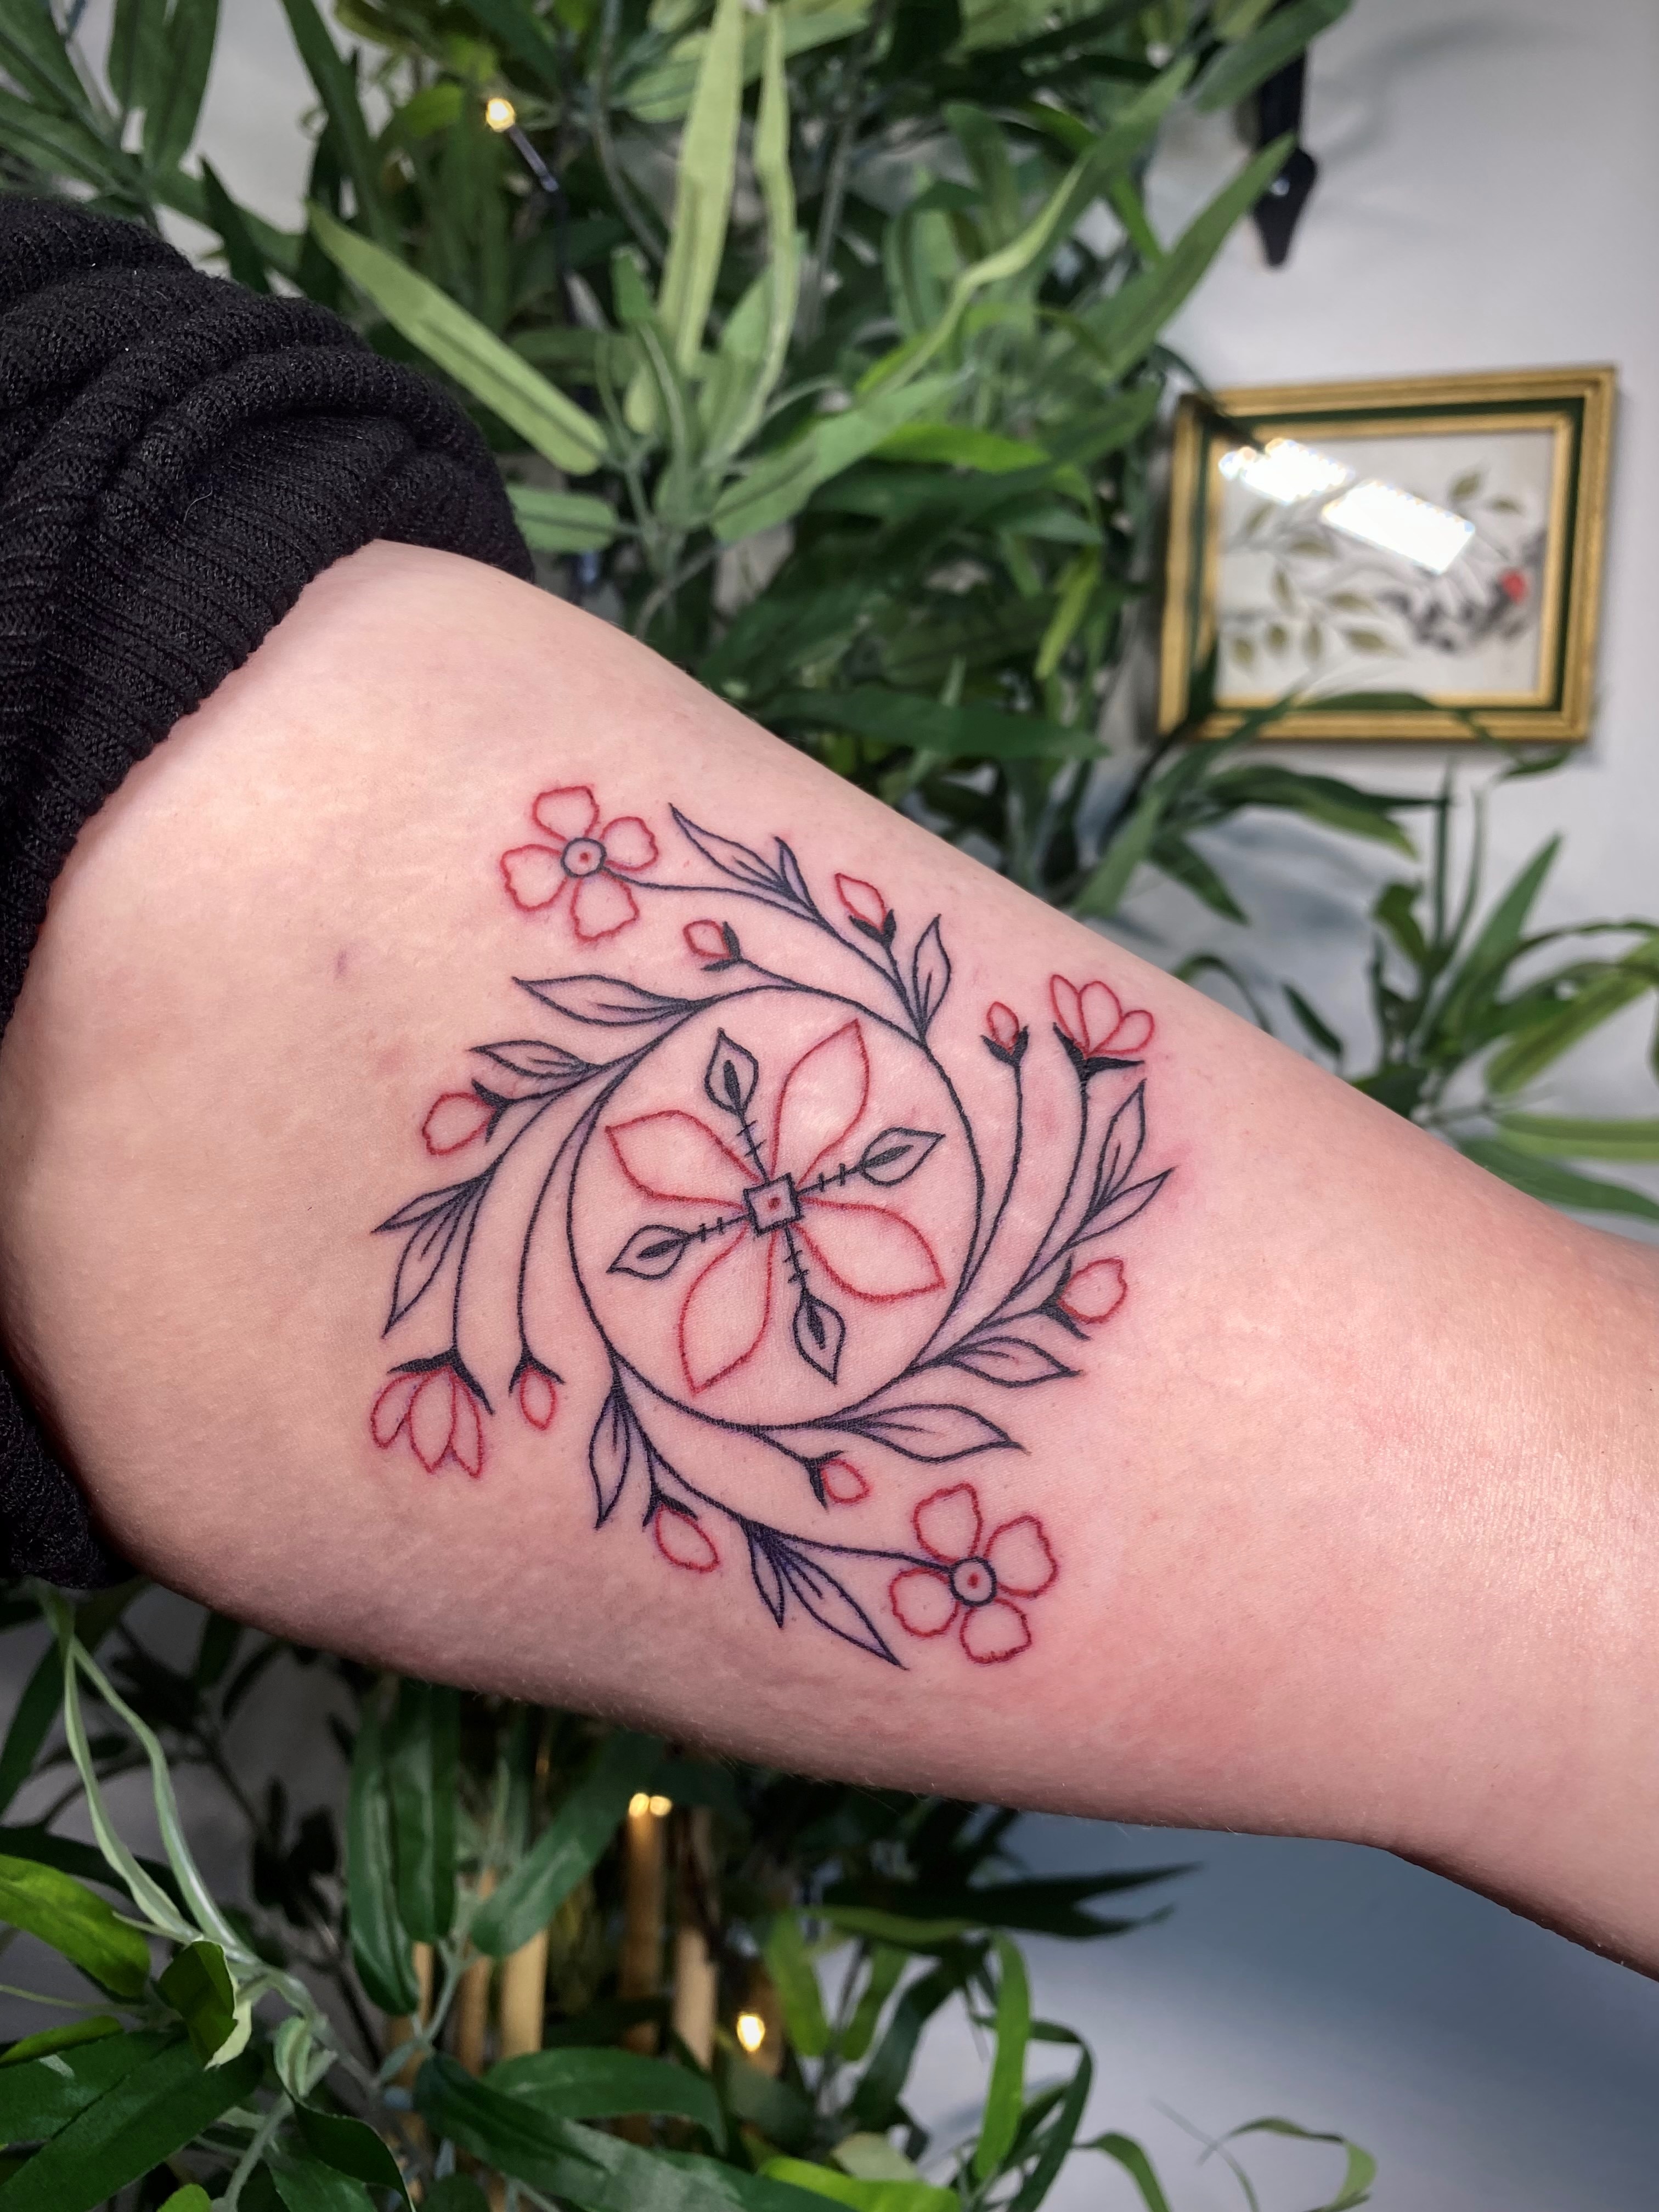 Winnipeg tattoo artist offering ink in support of Ukraine - Winnipeg